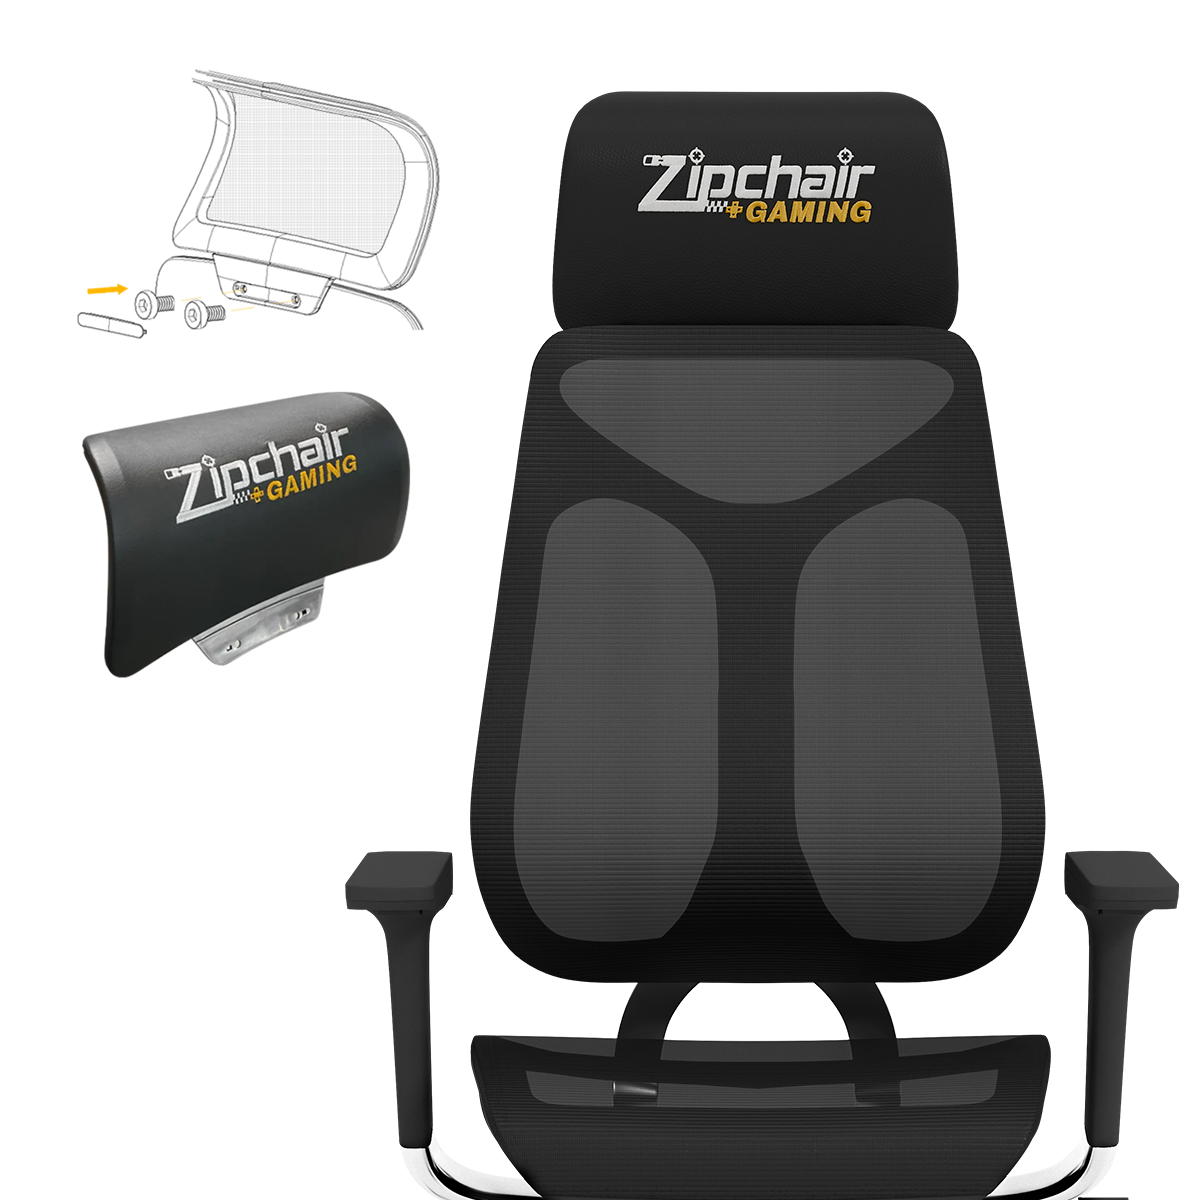 Phantom Gaming Chair – Zipchair Gaming